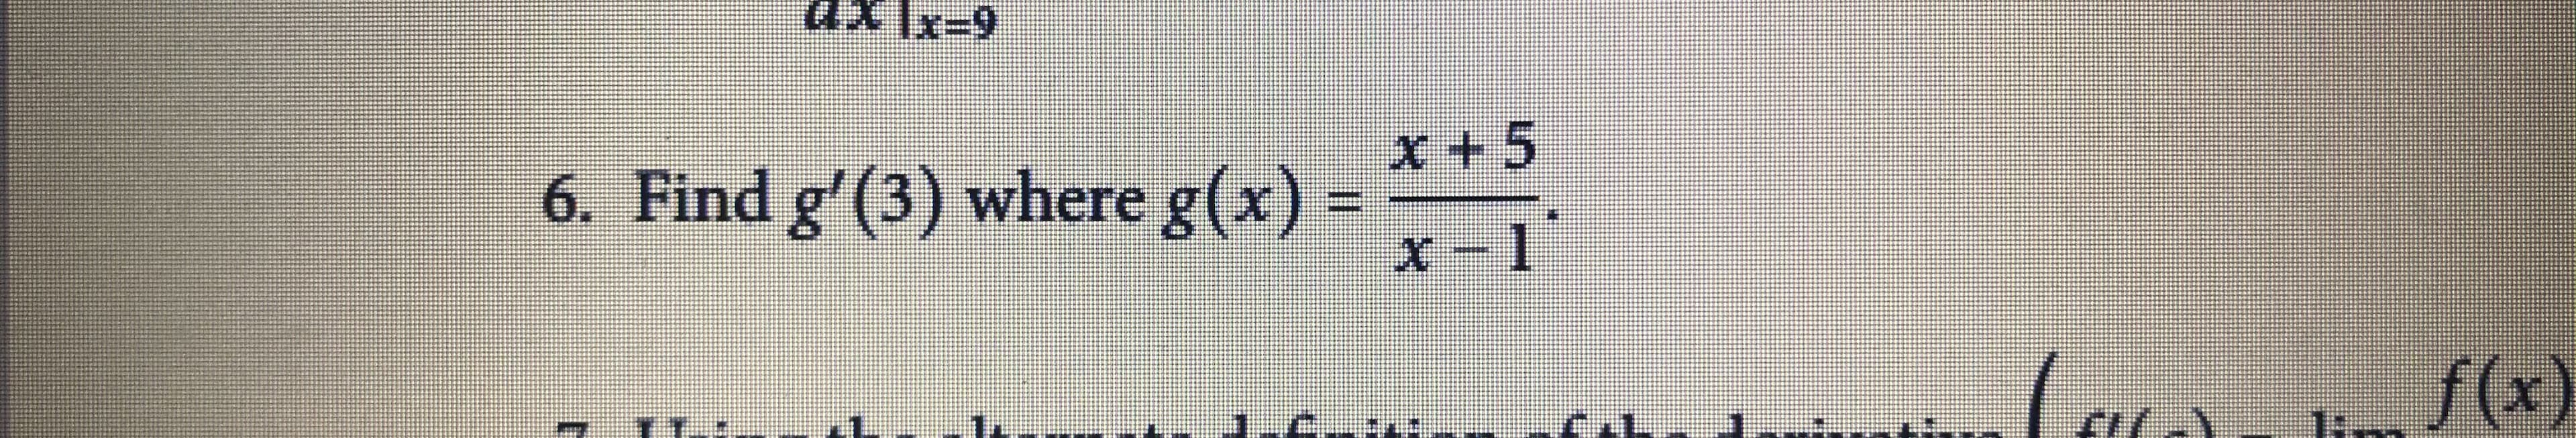 6. Find g'(3) where g(x)
x+5
x-1
